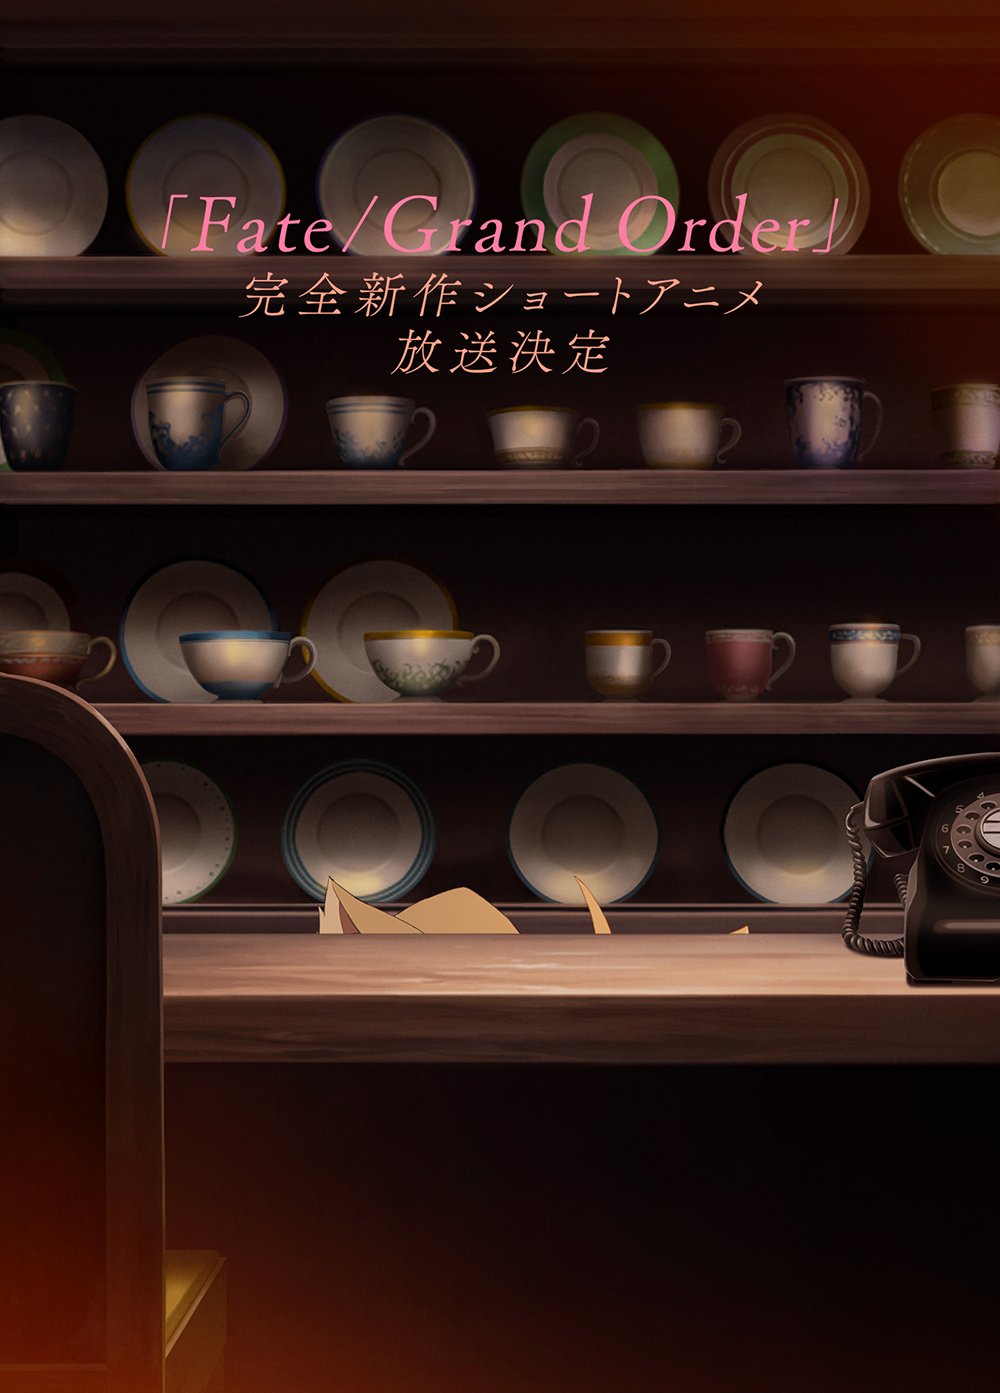 Fate / Grand Order Anime Short im TV-Special 2020 des Fate-Projekts